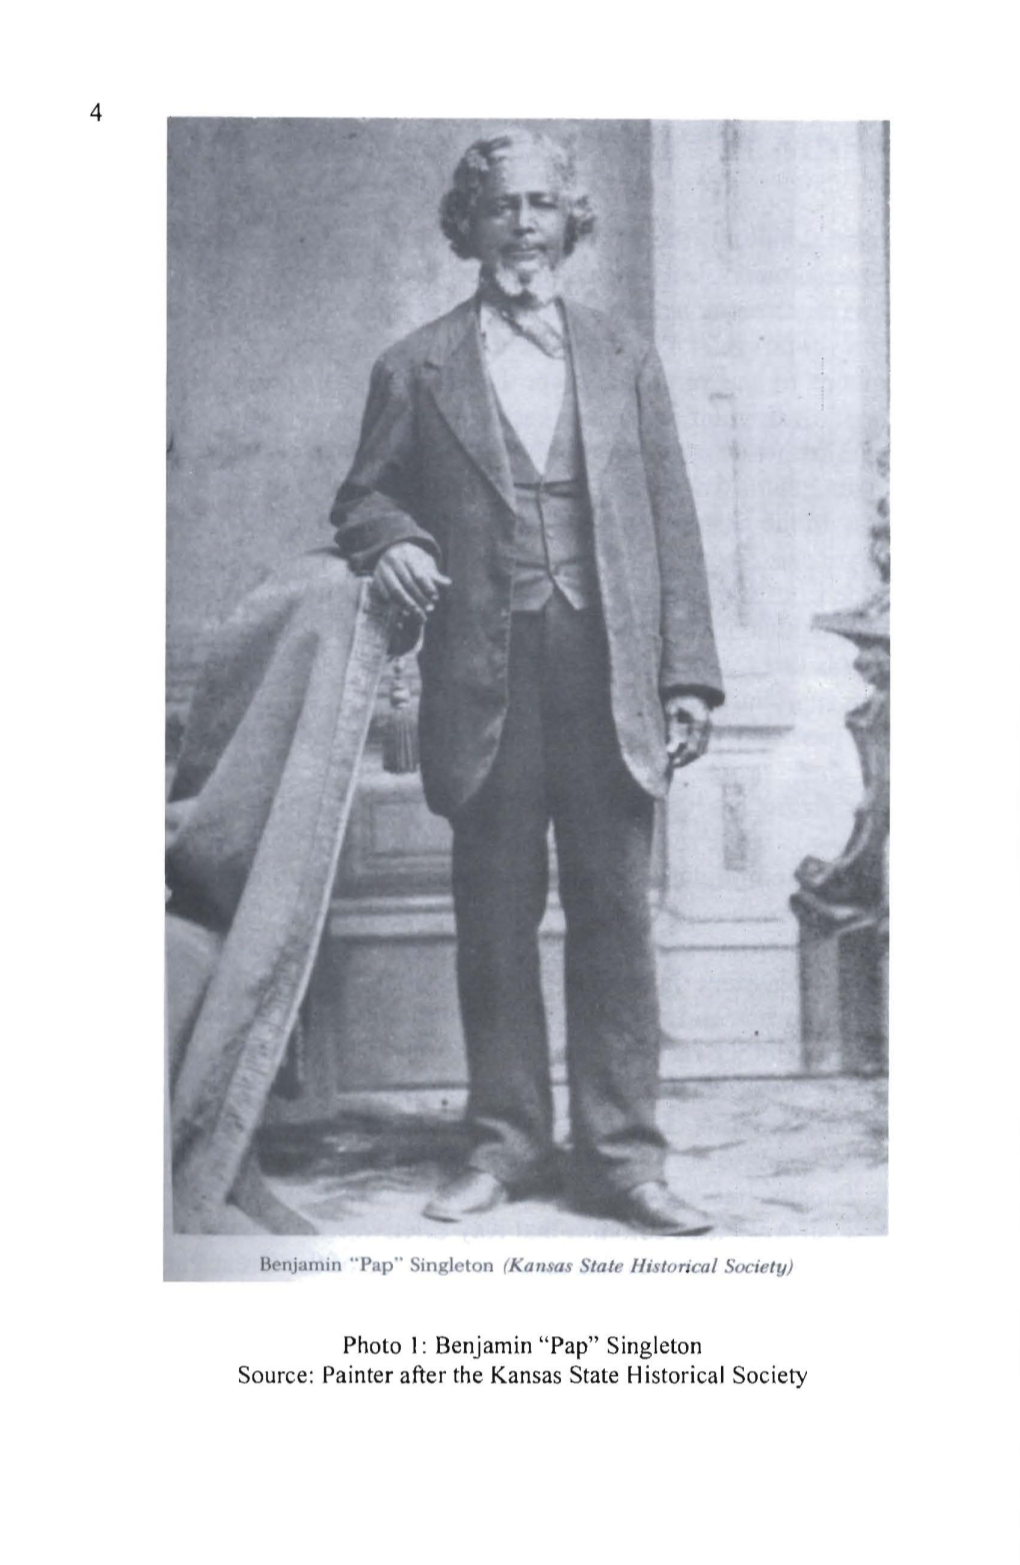 Photo I: Benjamin "Pap" Singleton Source: Painter After the Kansas State Historical Society 5